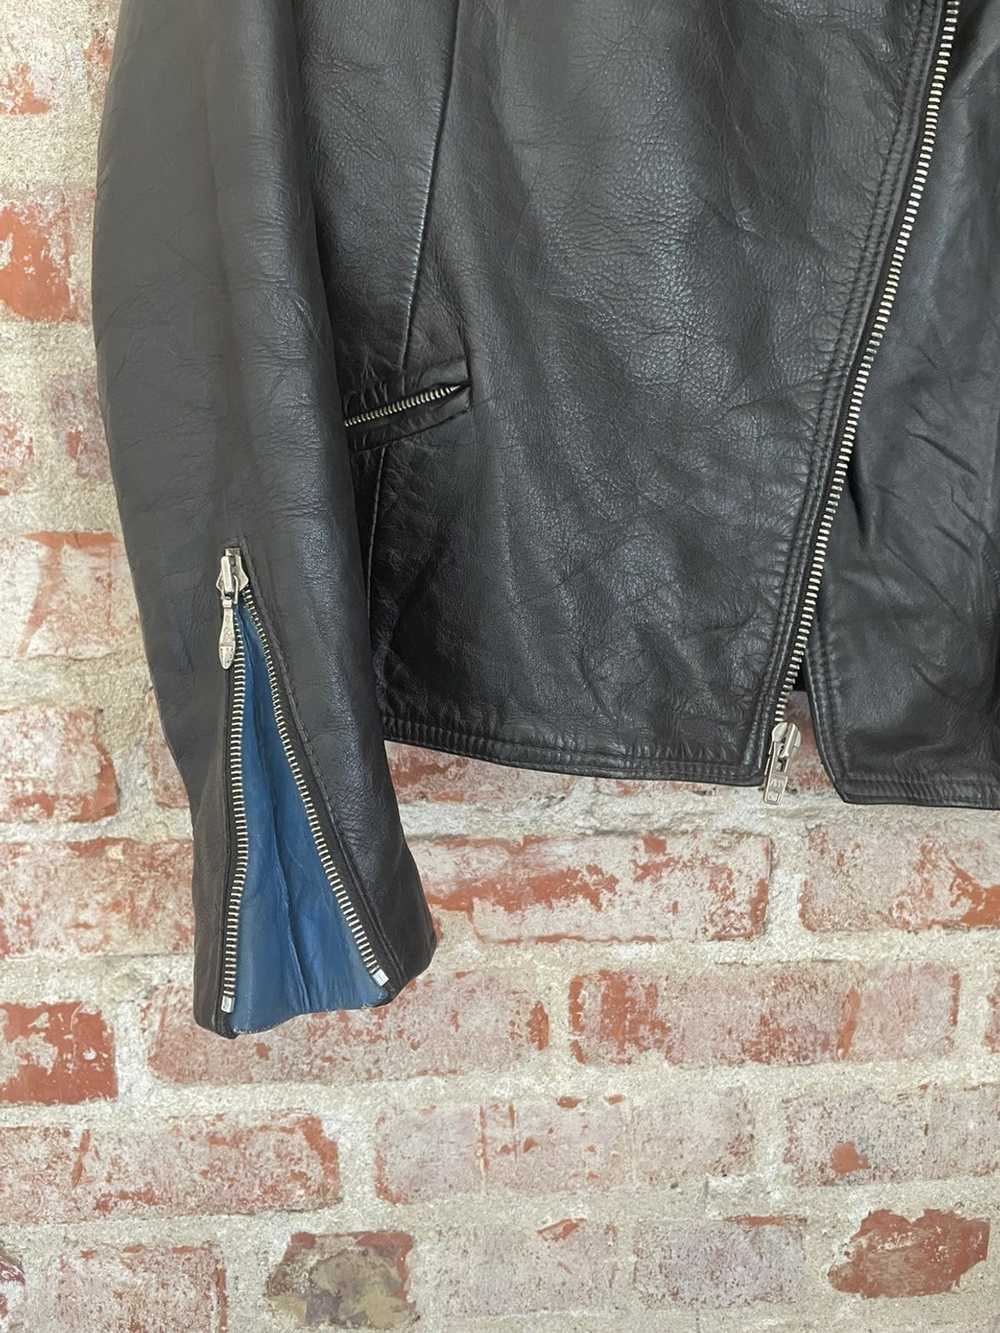 Vintage Vintage 1960s Leather Motorcycle Jacket - image 2